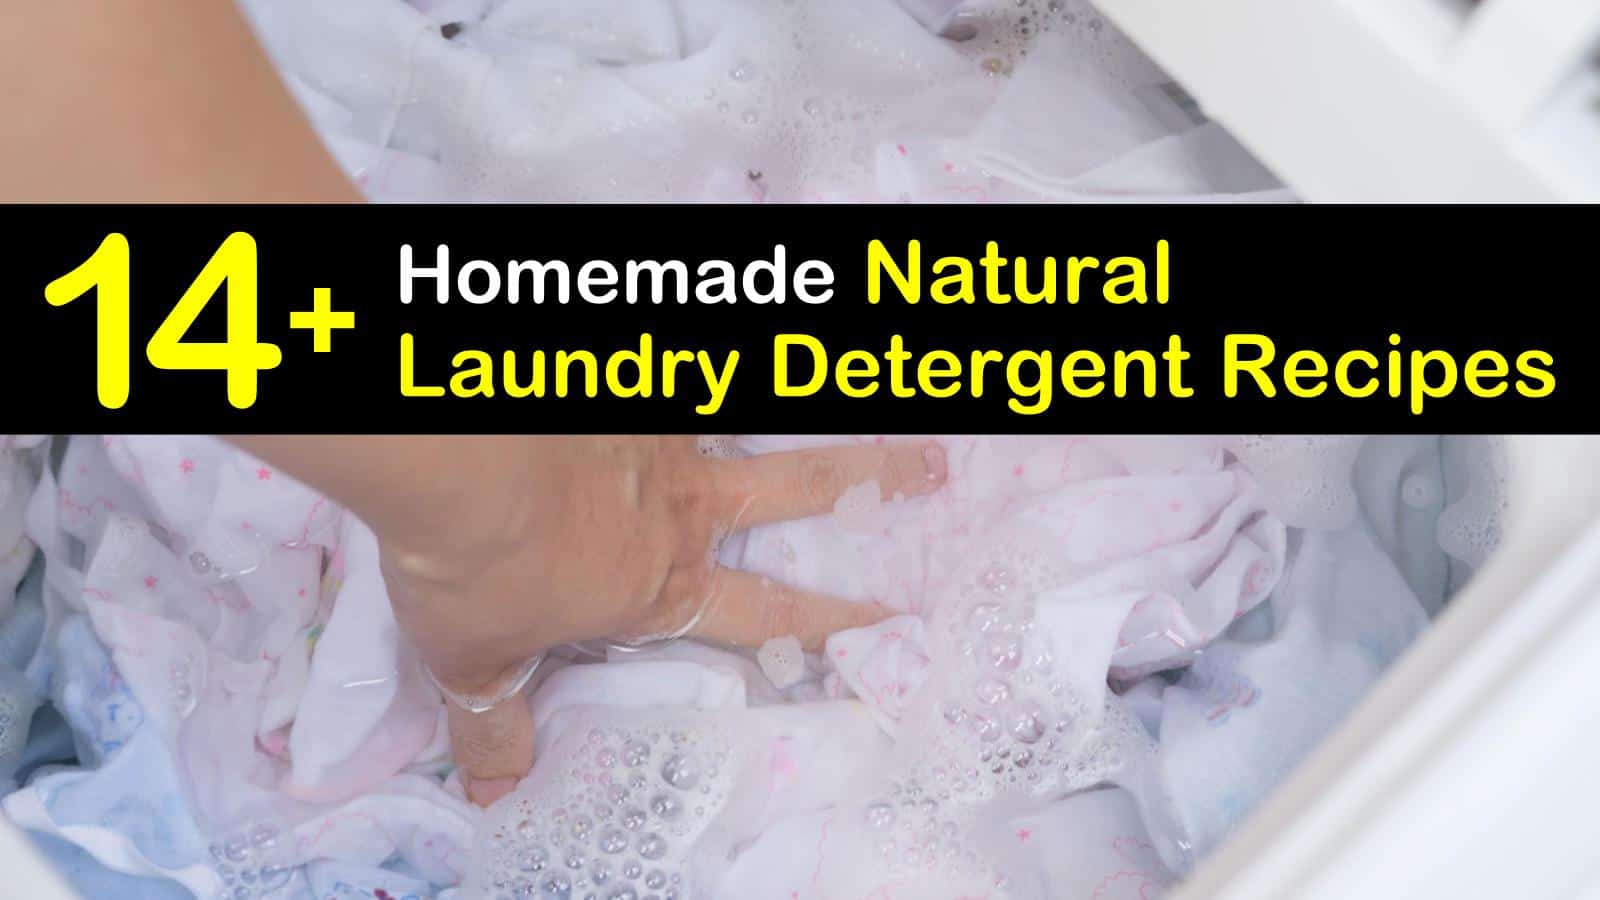 homemade natural laundry detergent titleimg1